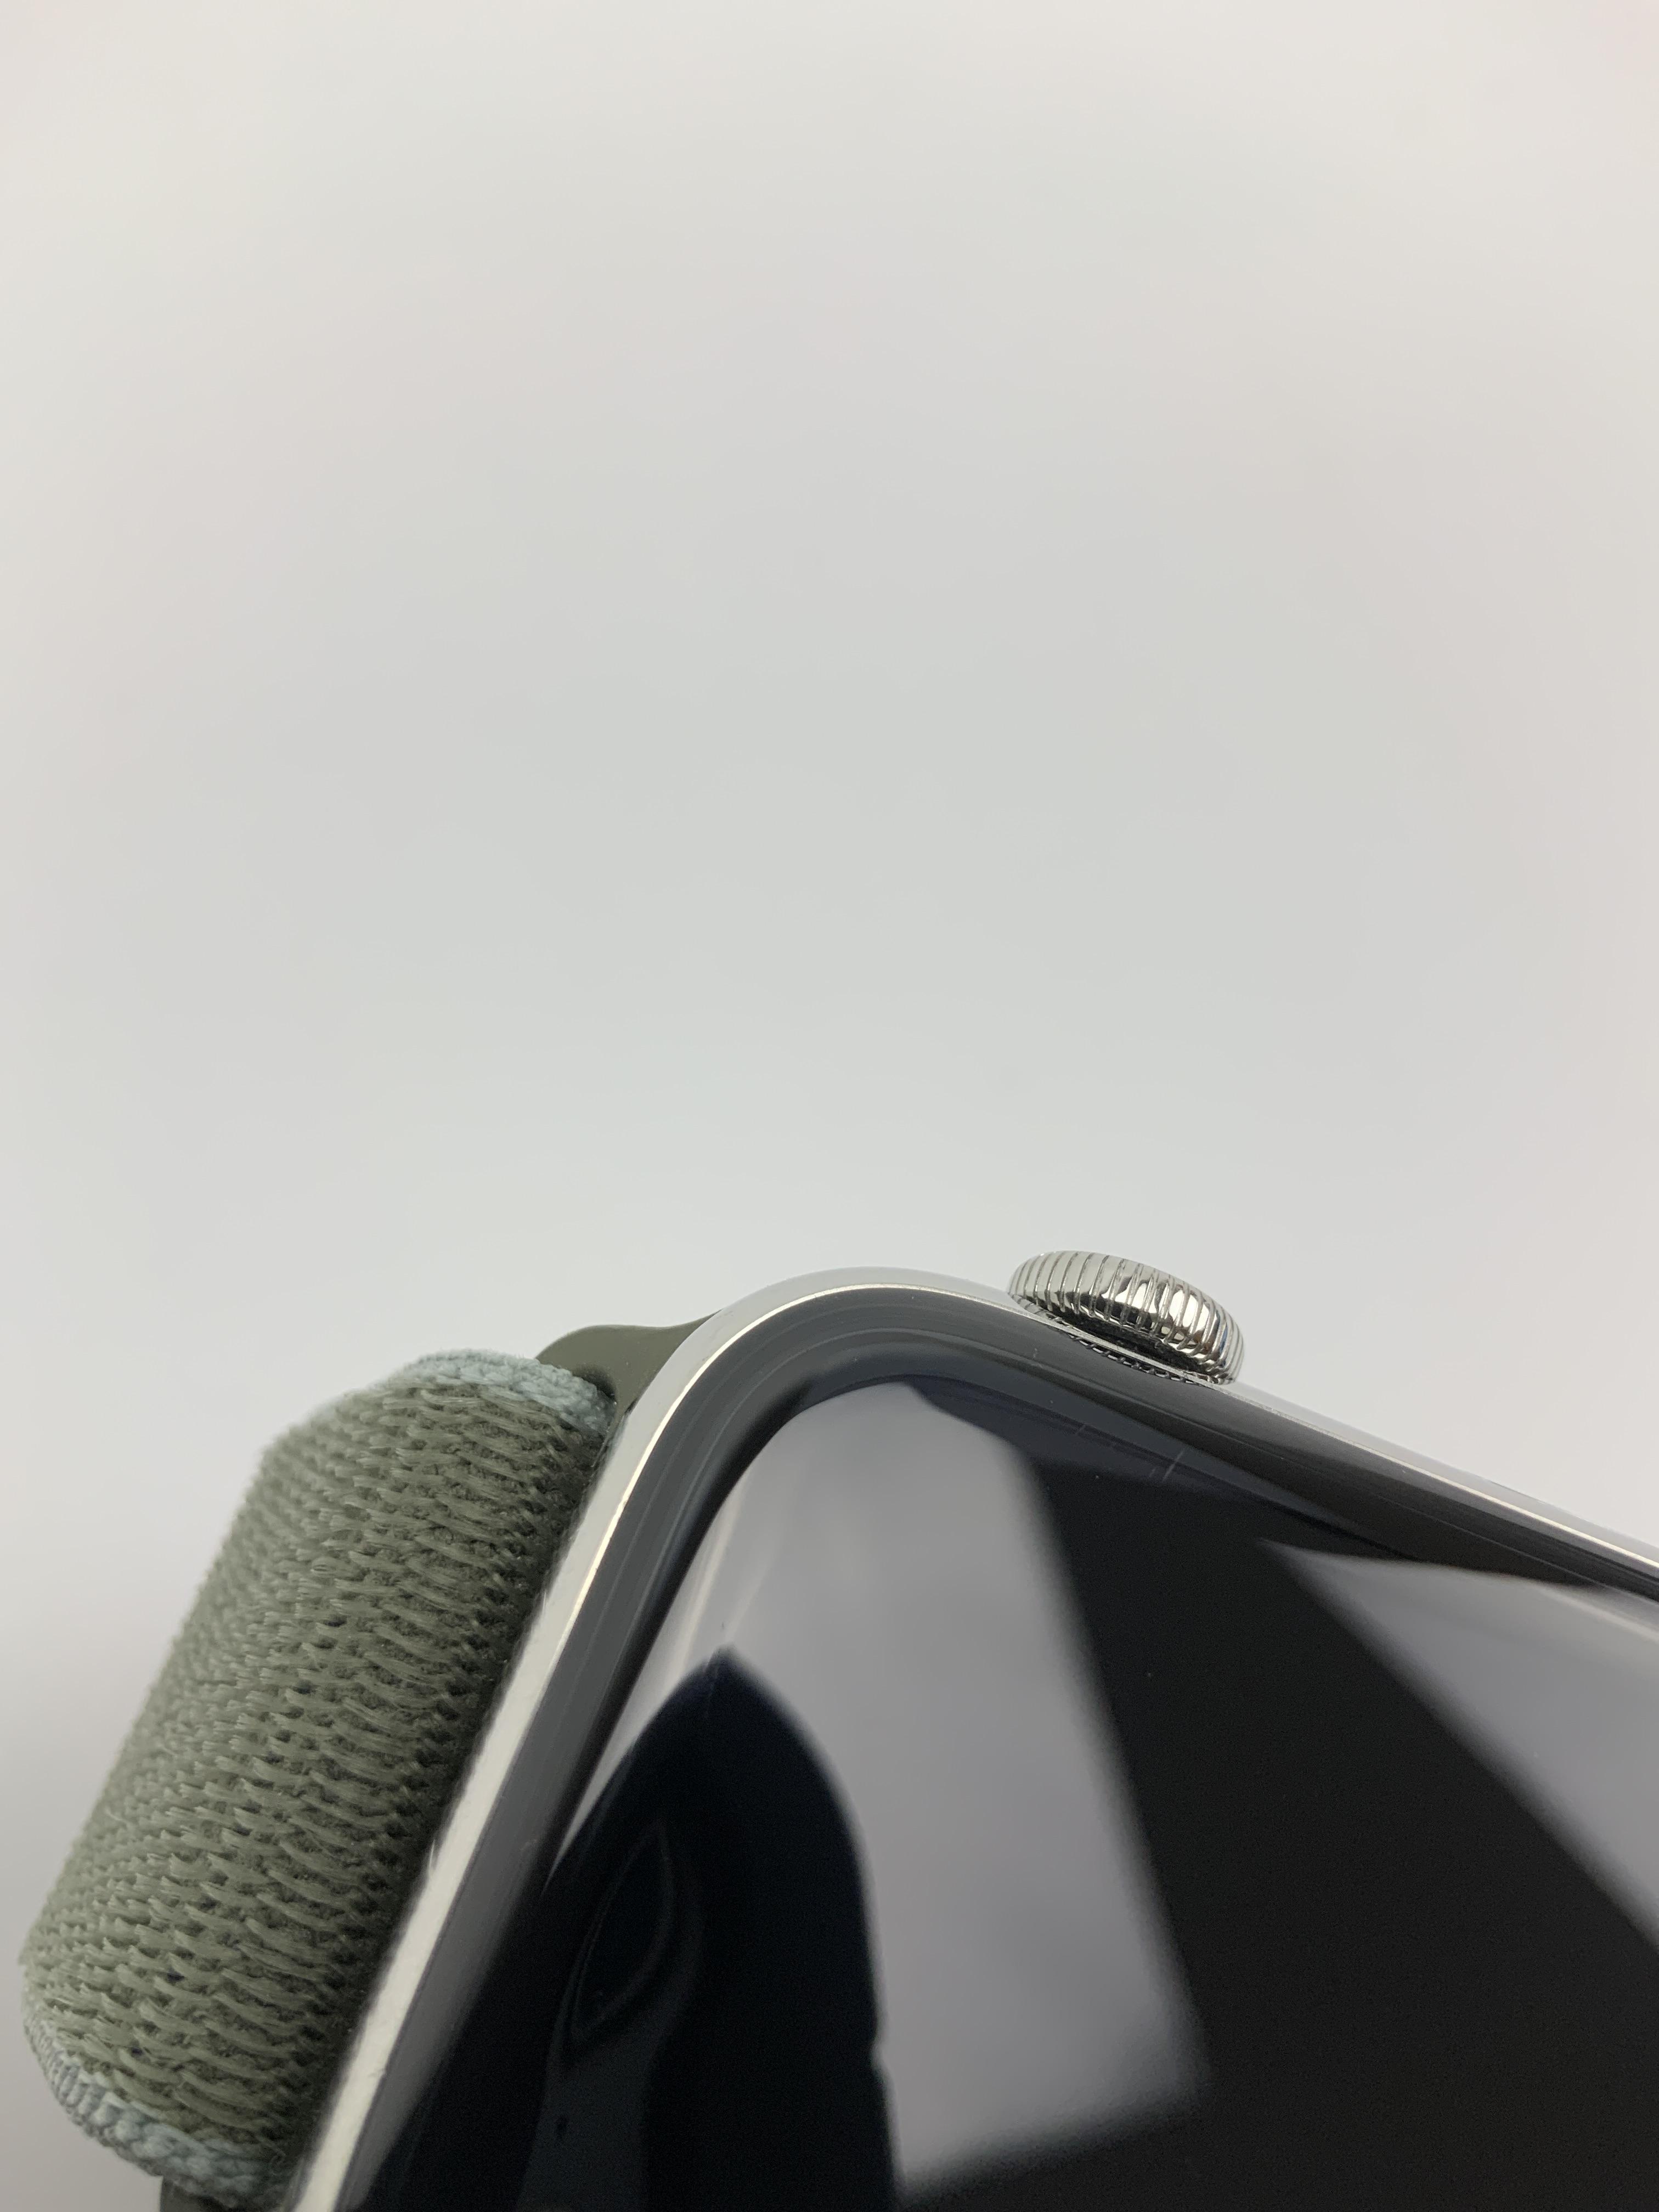 Watch Series 5 Steel Cellular (44mm), Silver, immagine 4